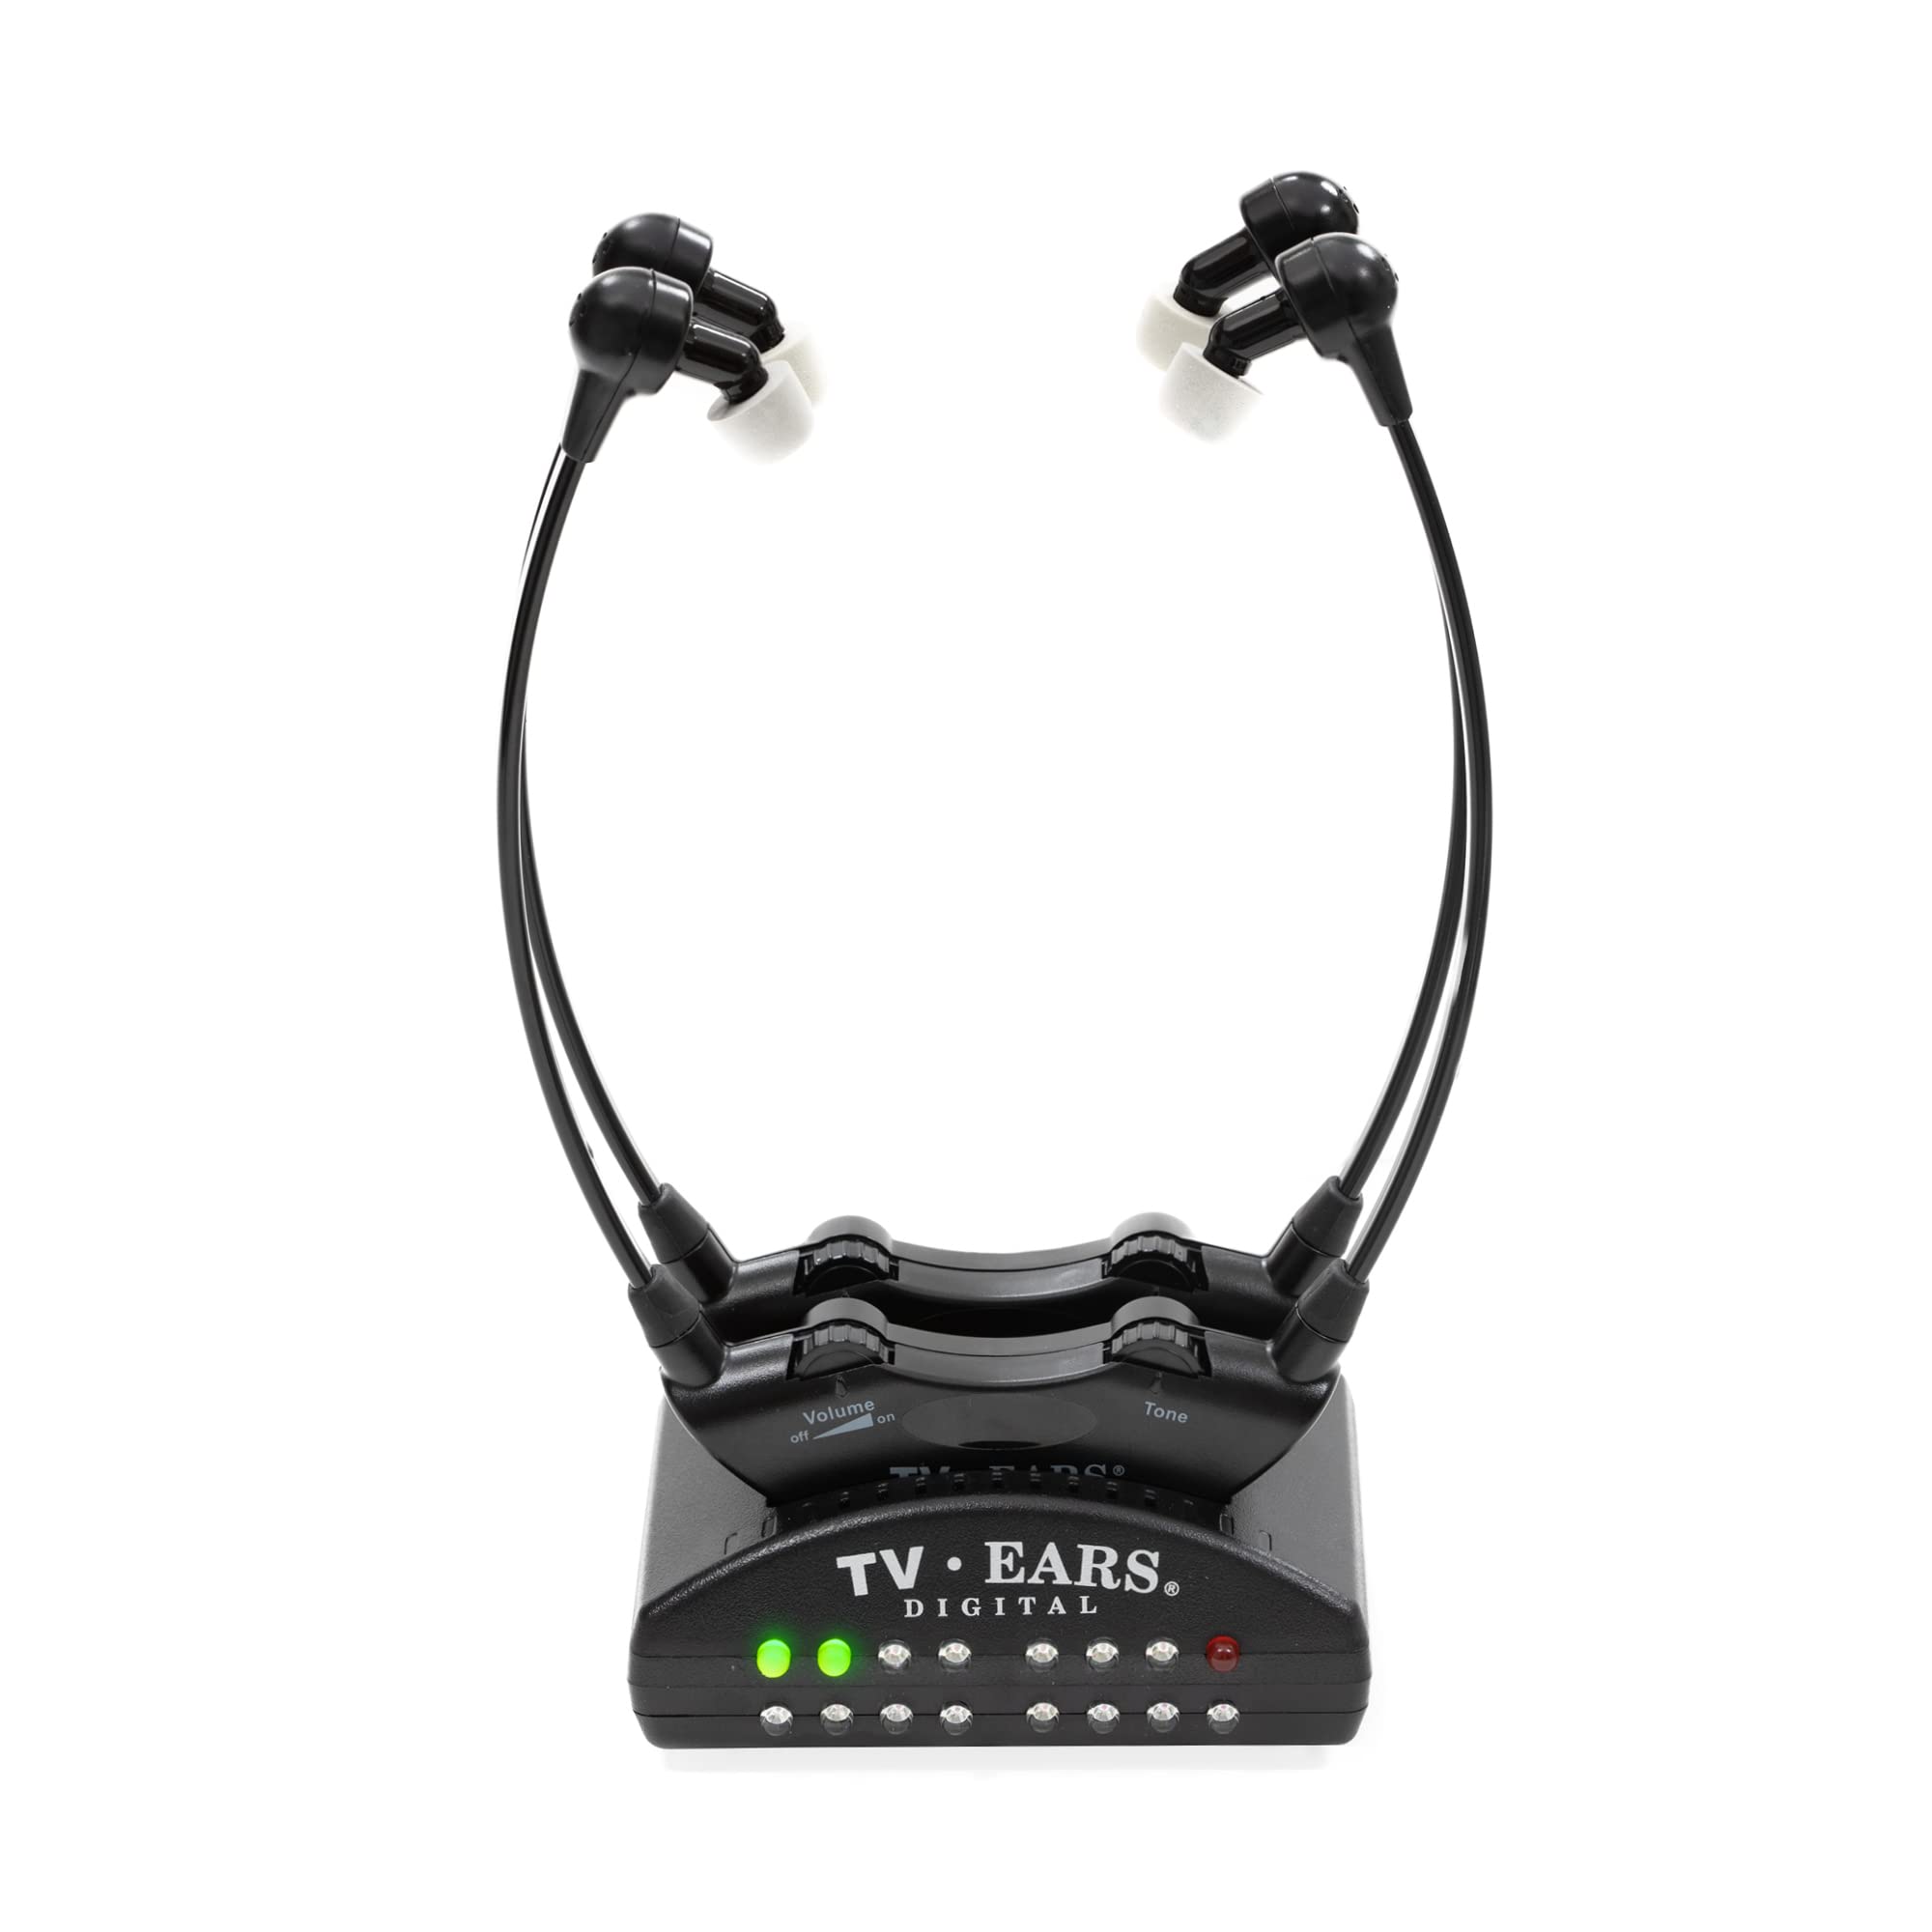  TV Ears Inc TV Ears 双数字无线耳机系统 - 同时使用 2 个耳机，音量不同，支持所有电视，非常适合老年人和听力障碍人士，红外线，即插即用 - 博士推荐 -...